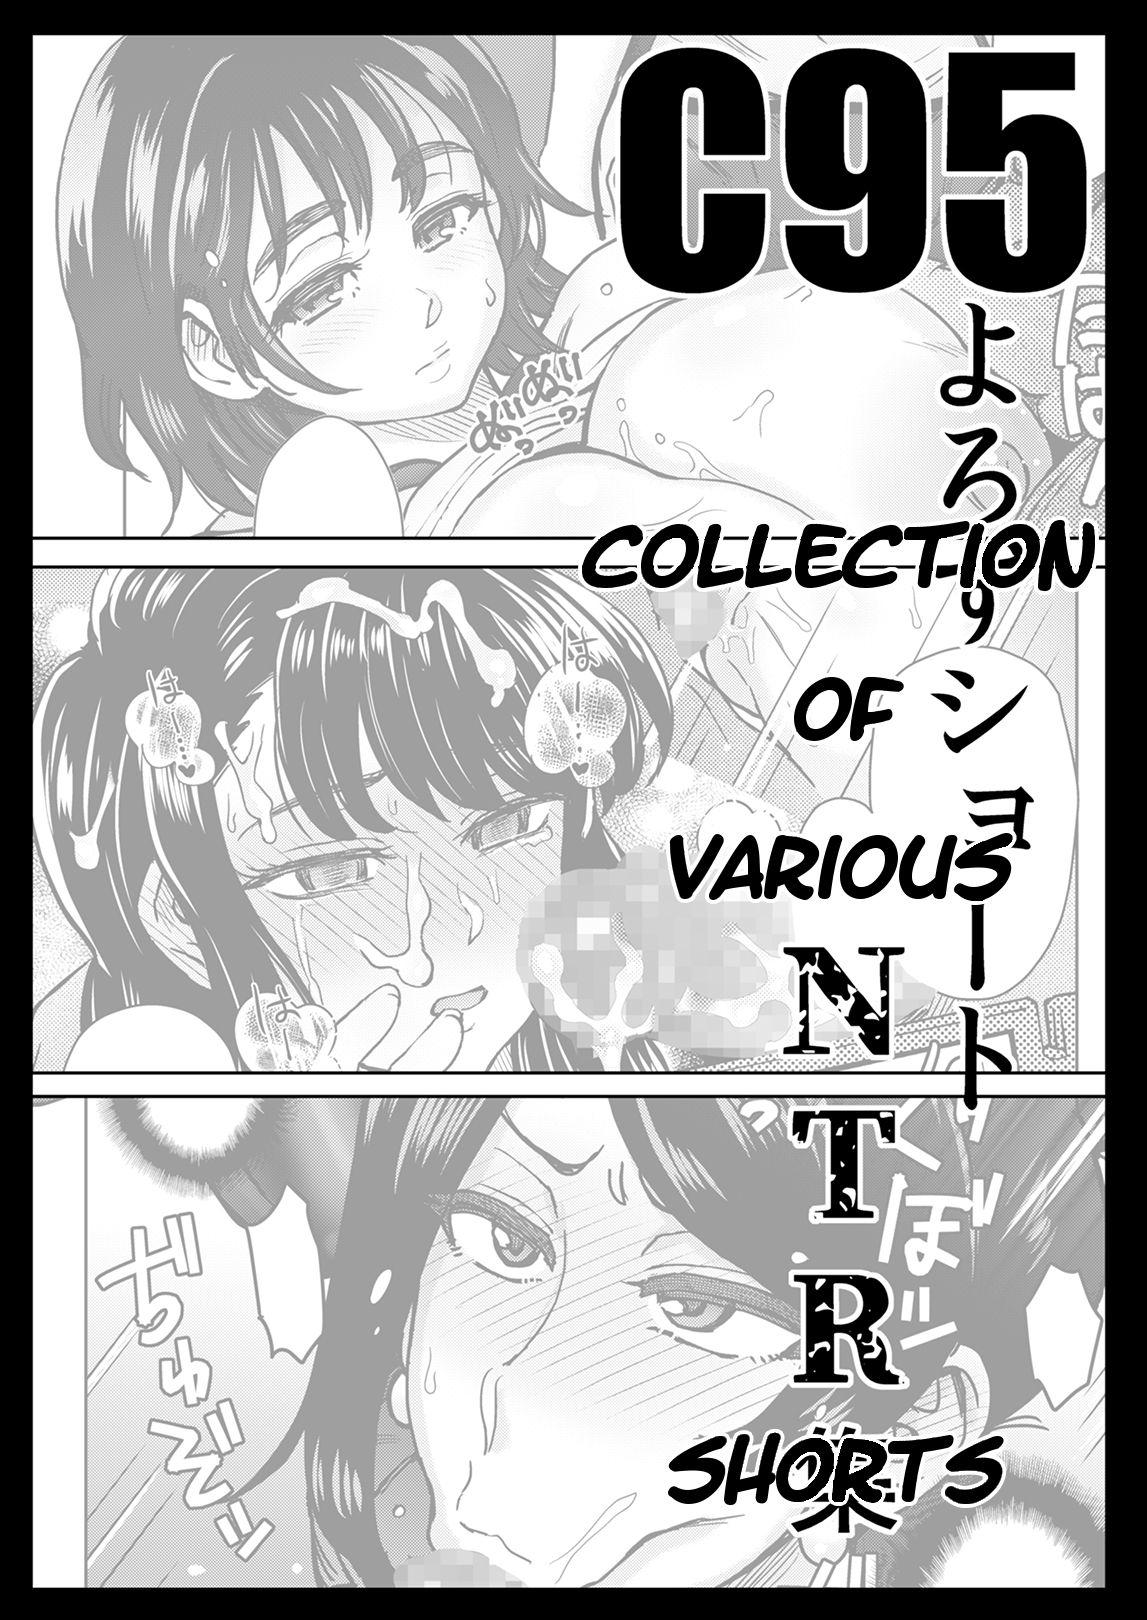 C95 Yorozu NTR Short Manga Shuu | C95 Collection of Various NTR Shorts 1